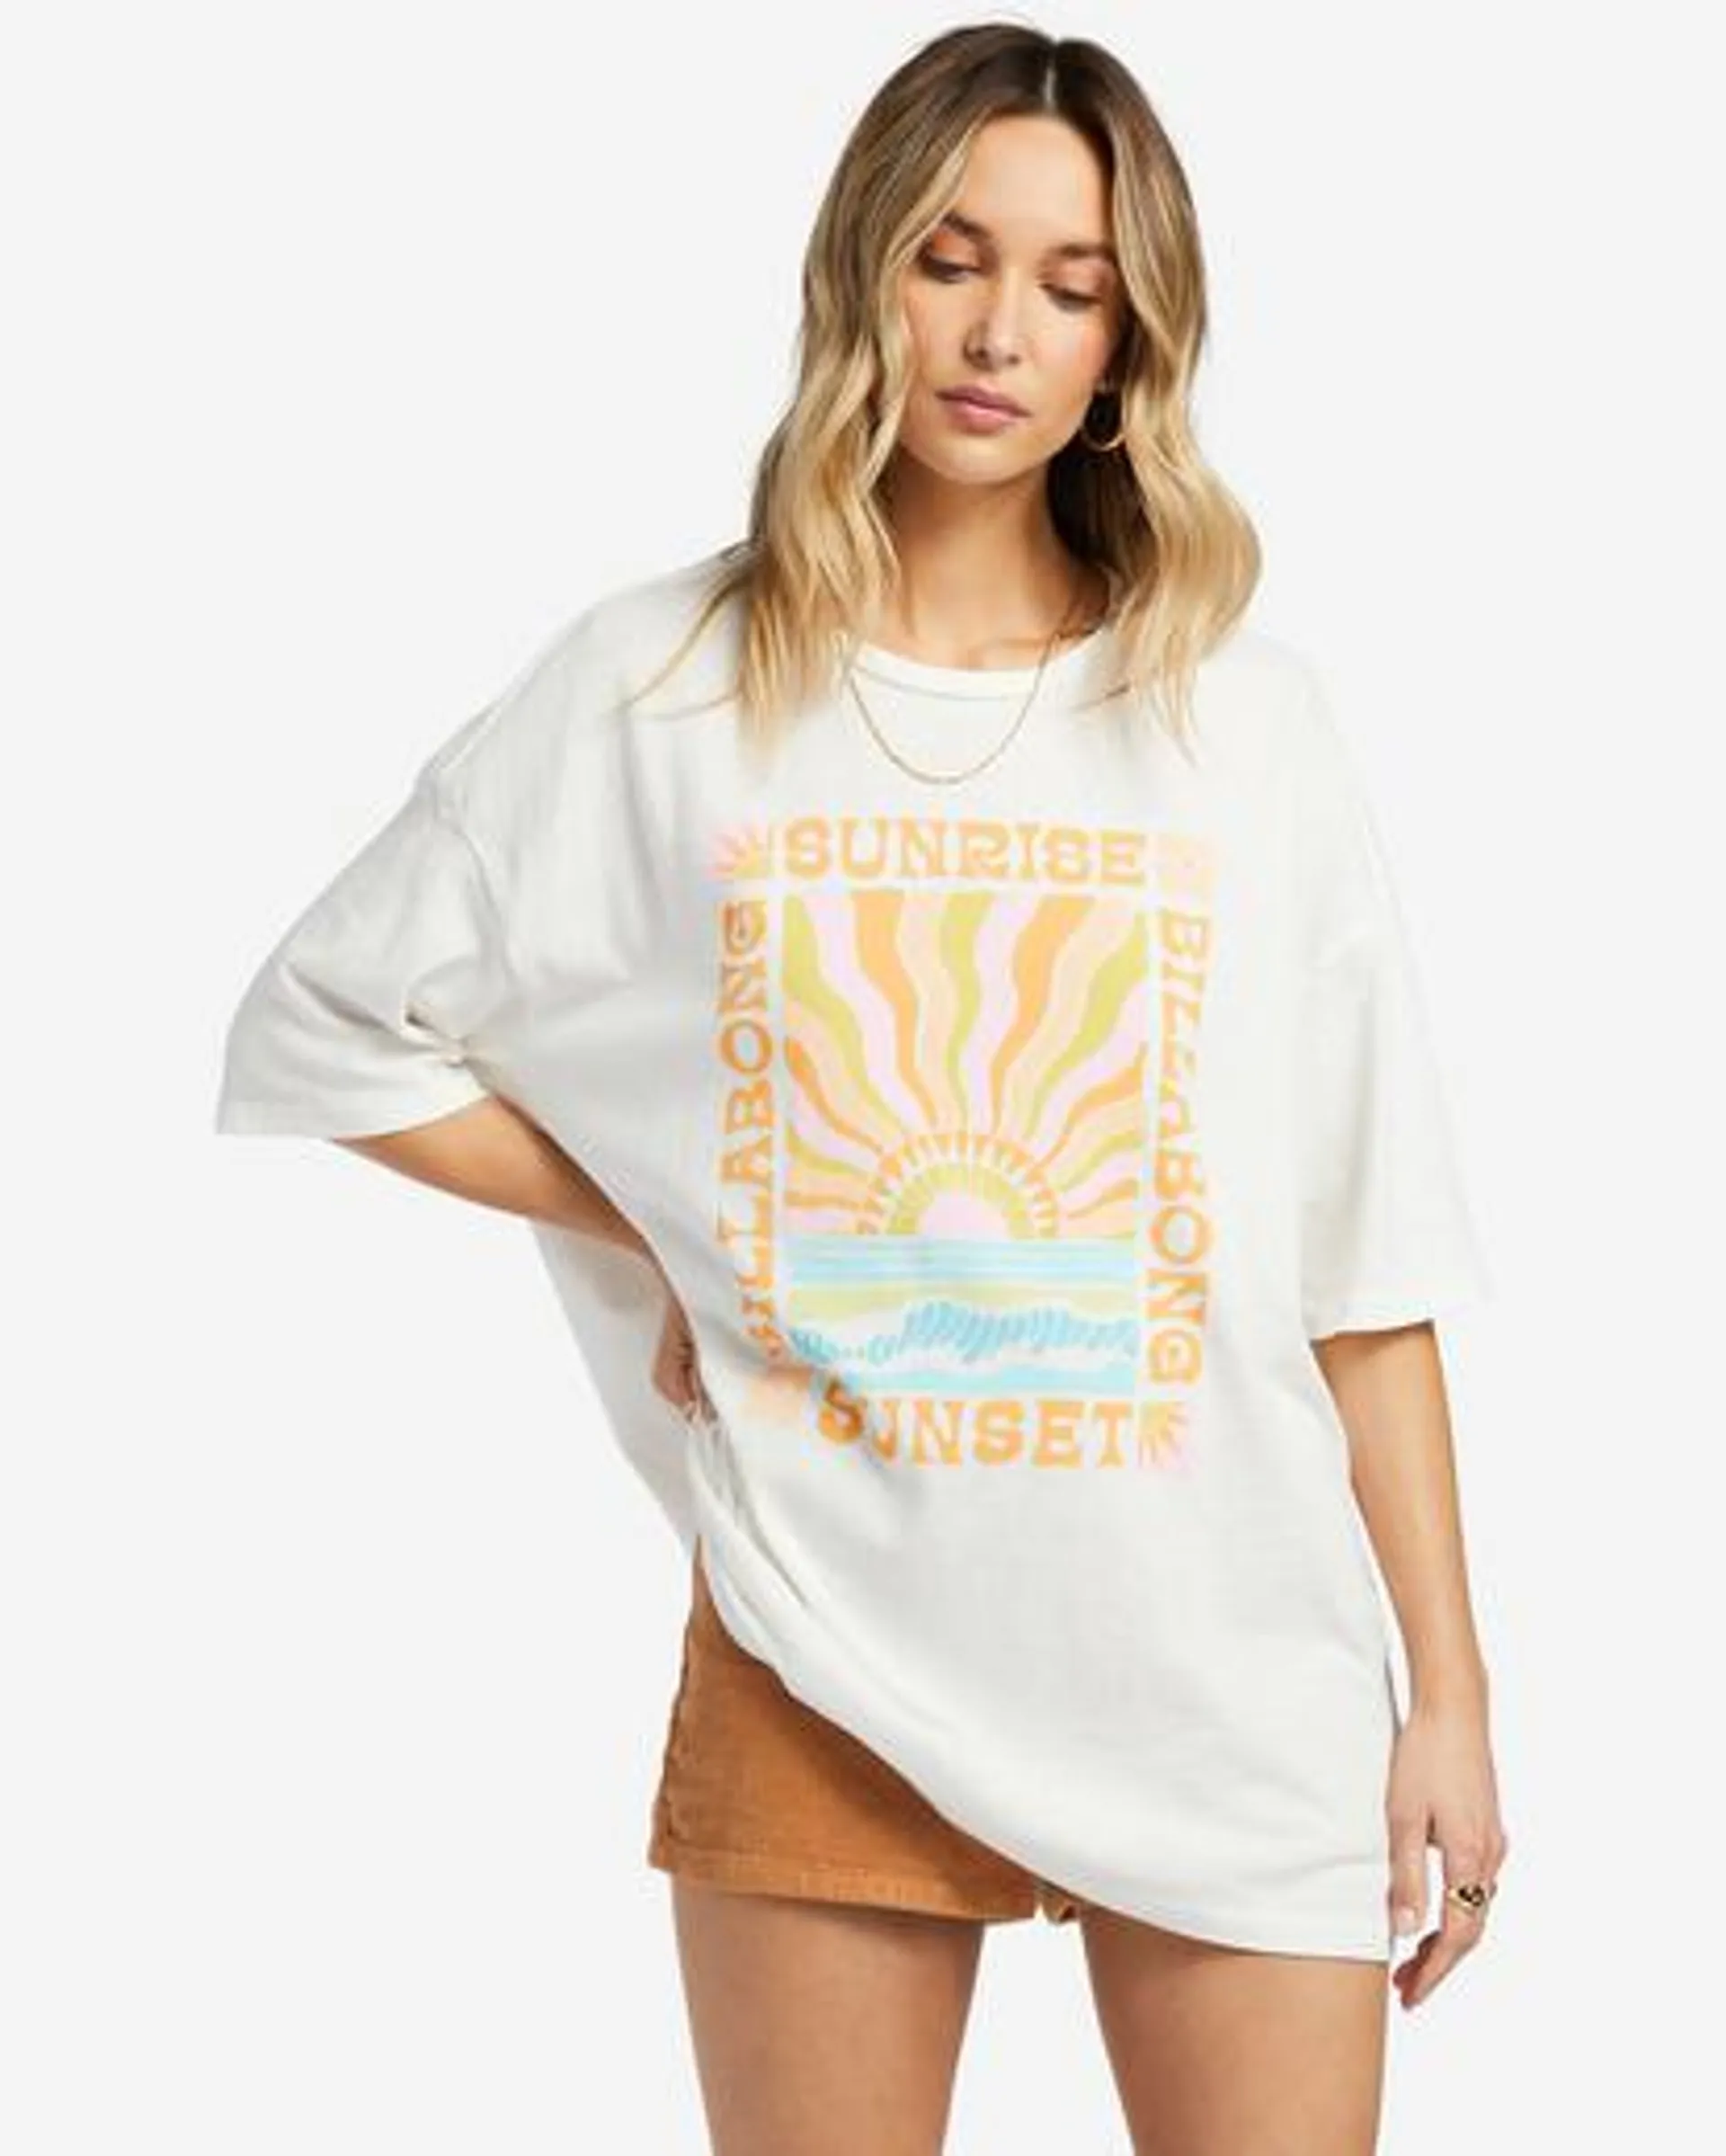 Sunrise To Sunset - T-shirt pour Femme